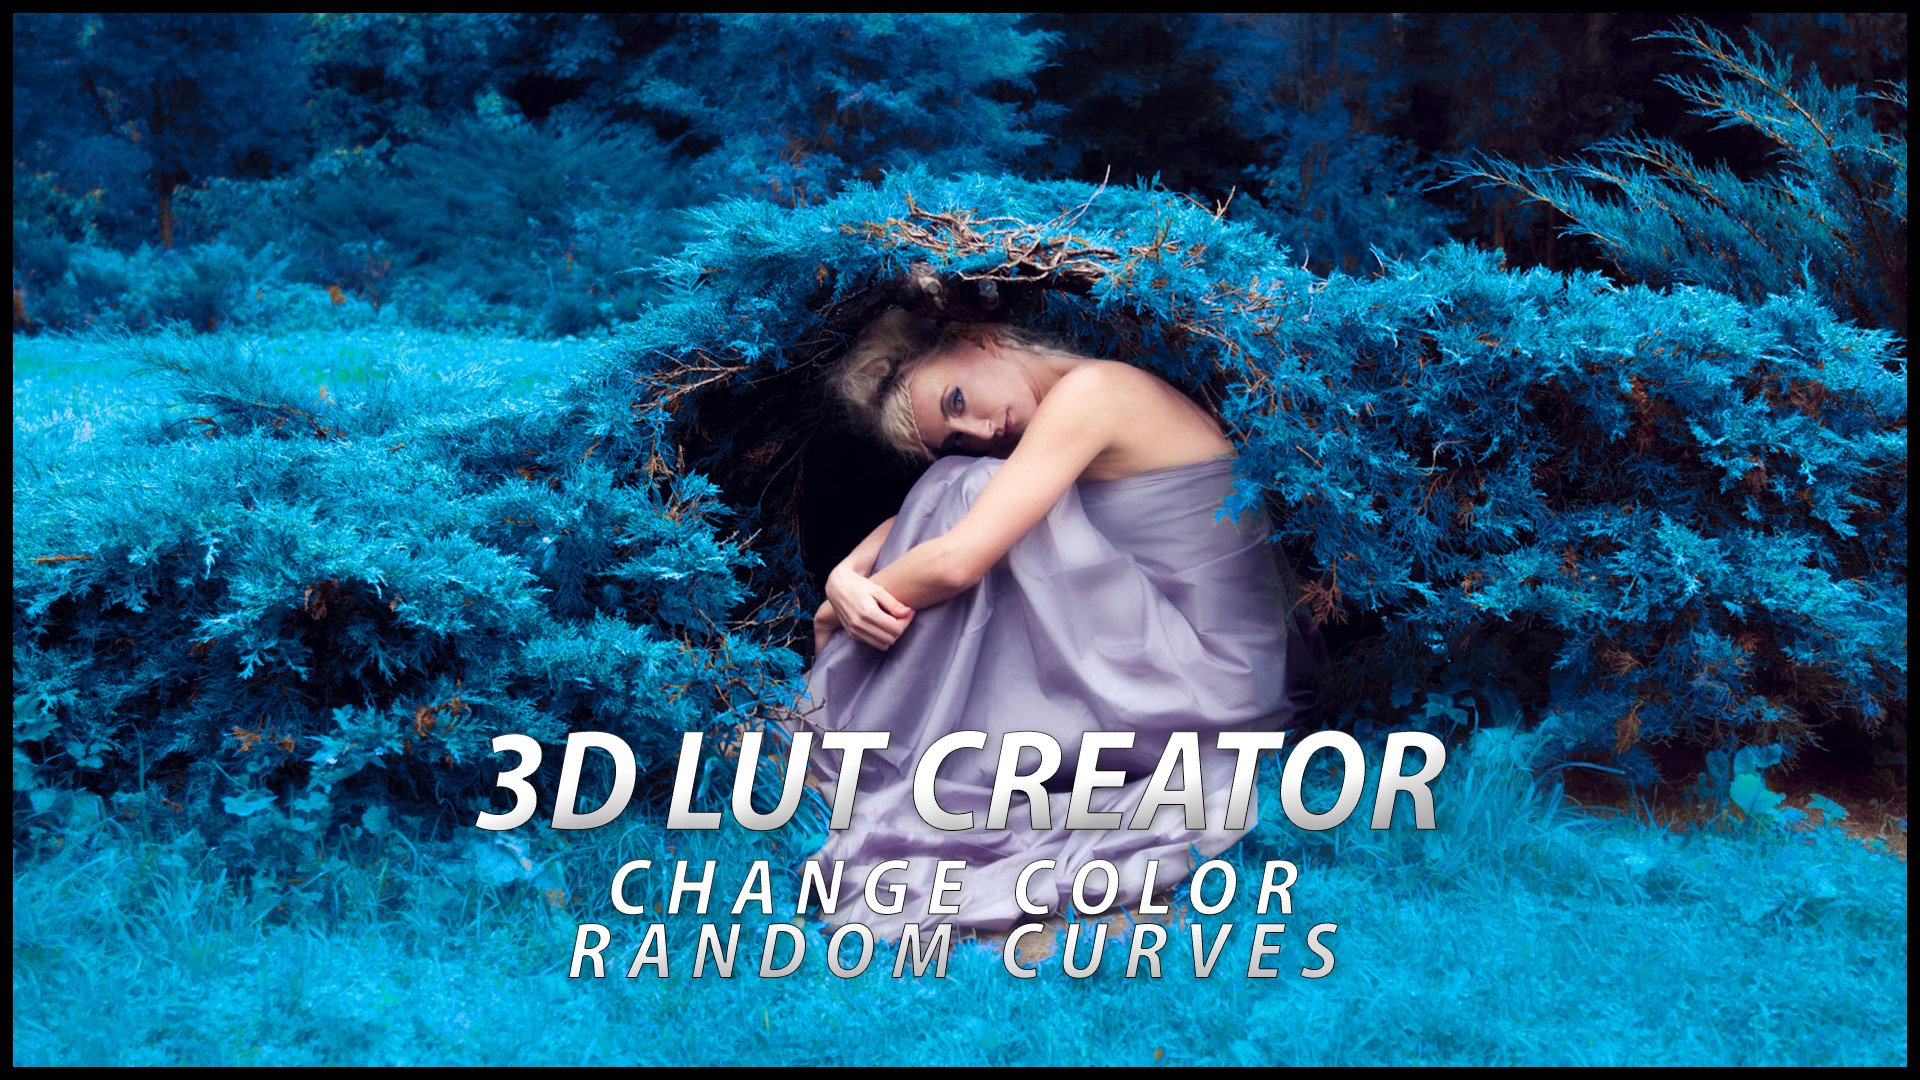 3D LUT CREATOR - Change Color, Random Curves (S E R E B R Y &#923; K O V)